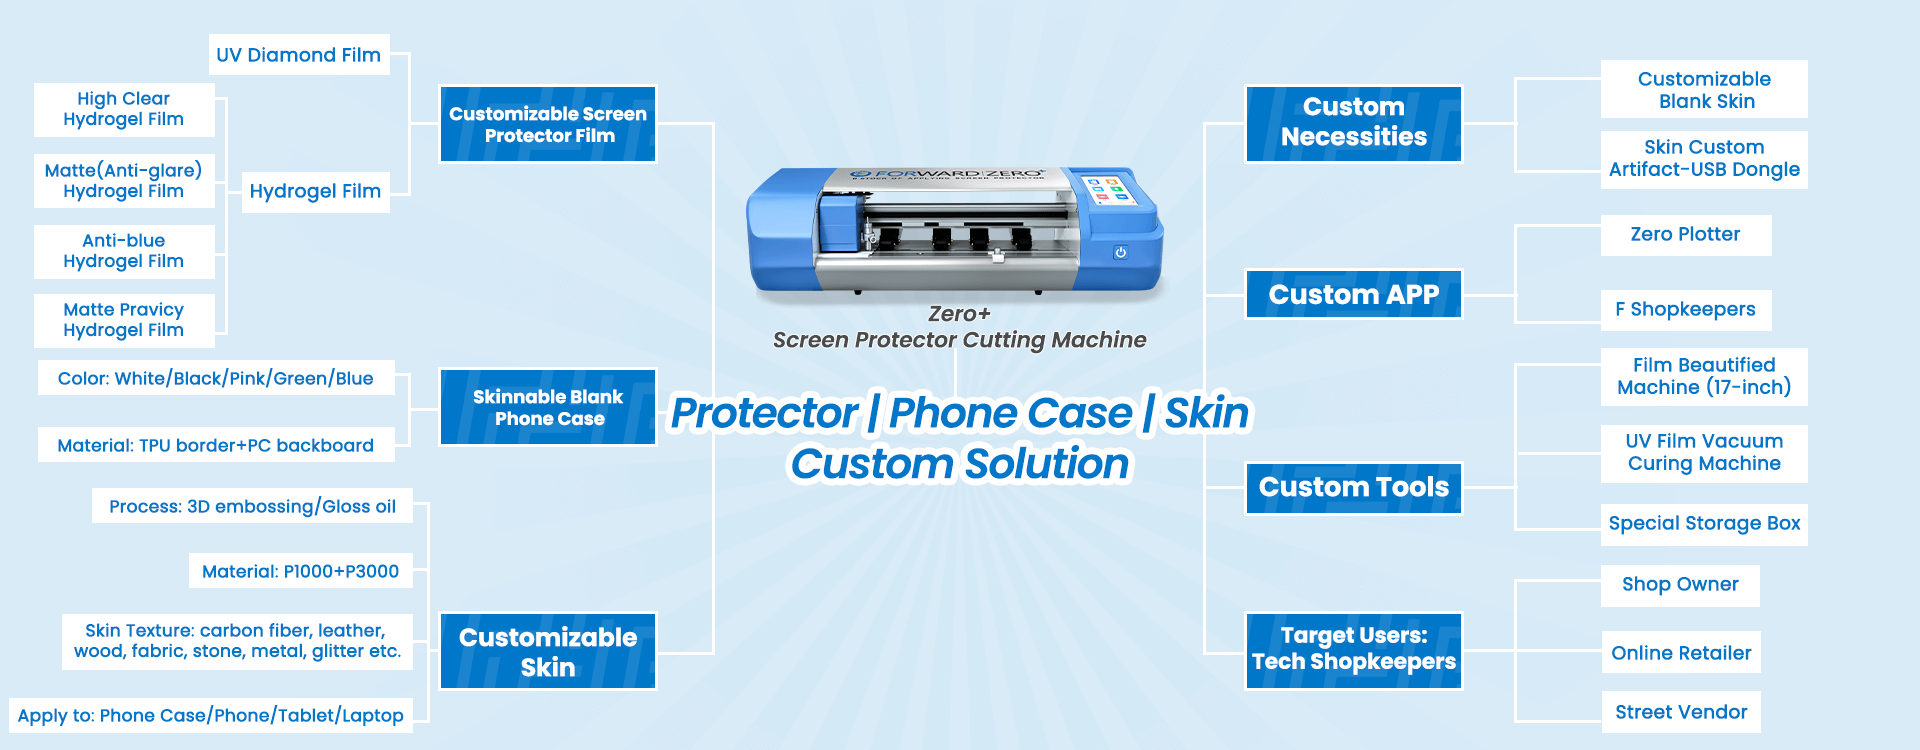 Protector-I-Phone-Case-I-Skin-Custom-Solution